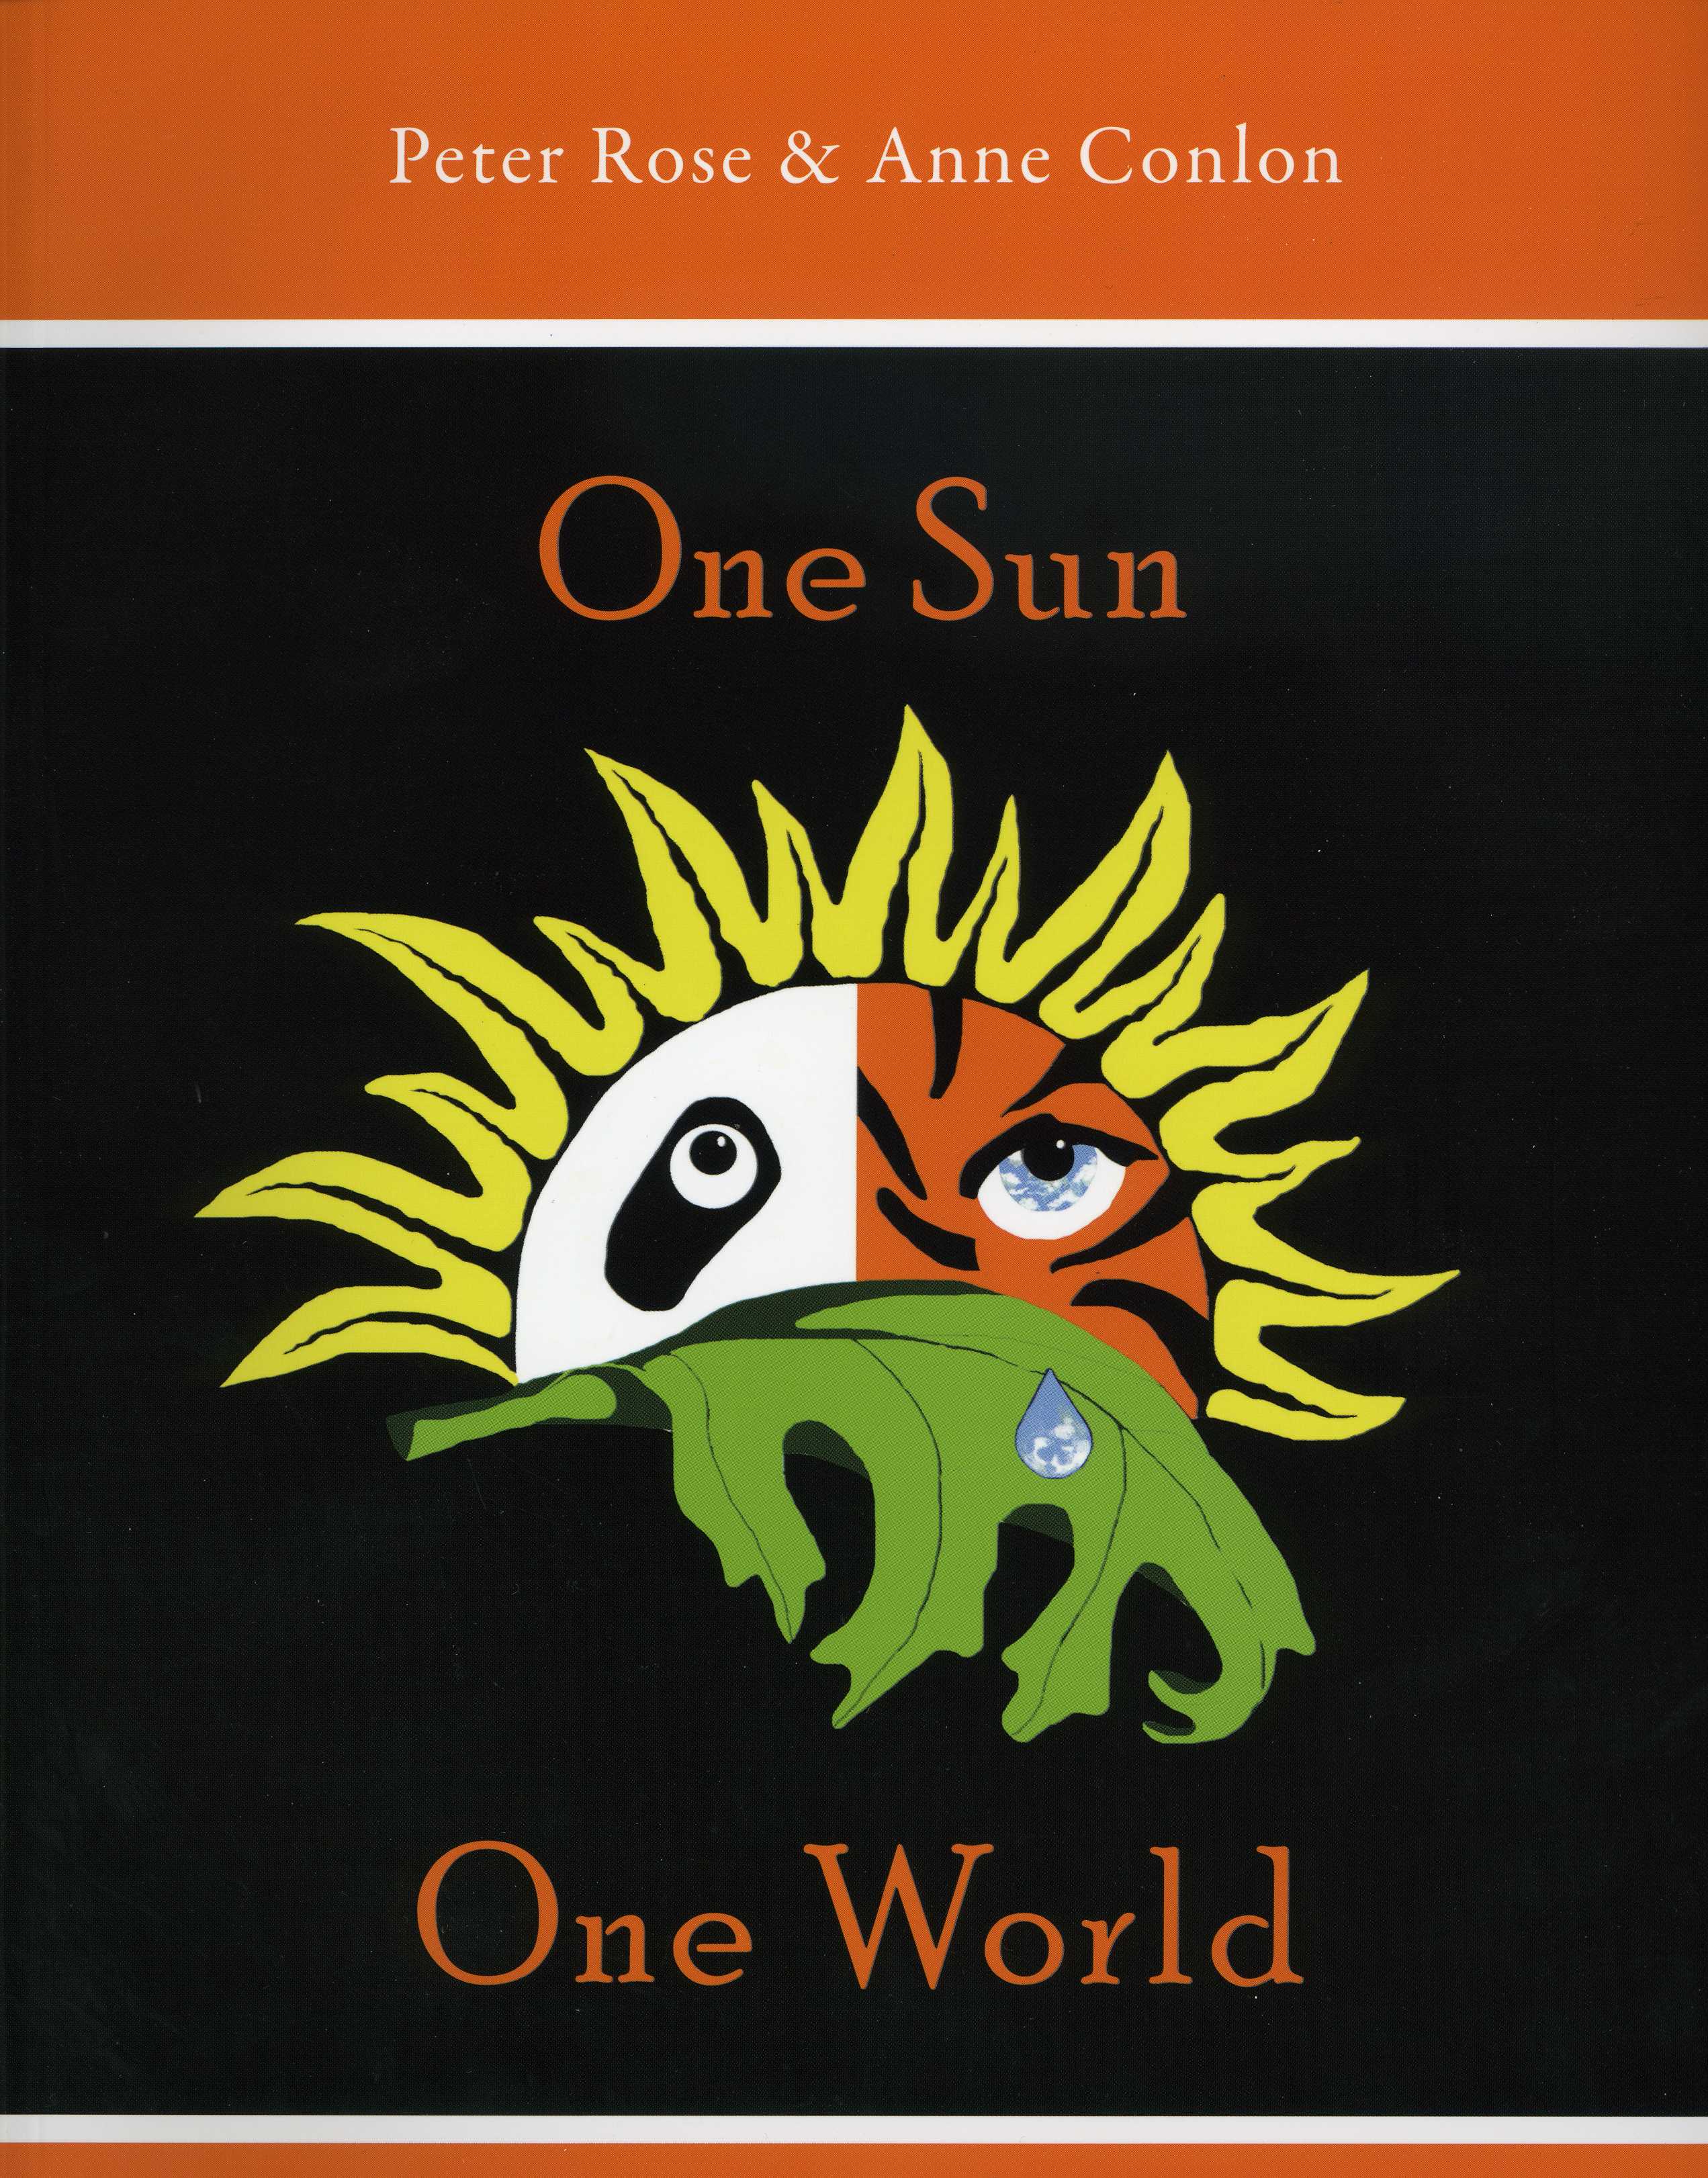 One Sun One World - A Musical Entertainment